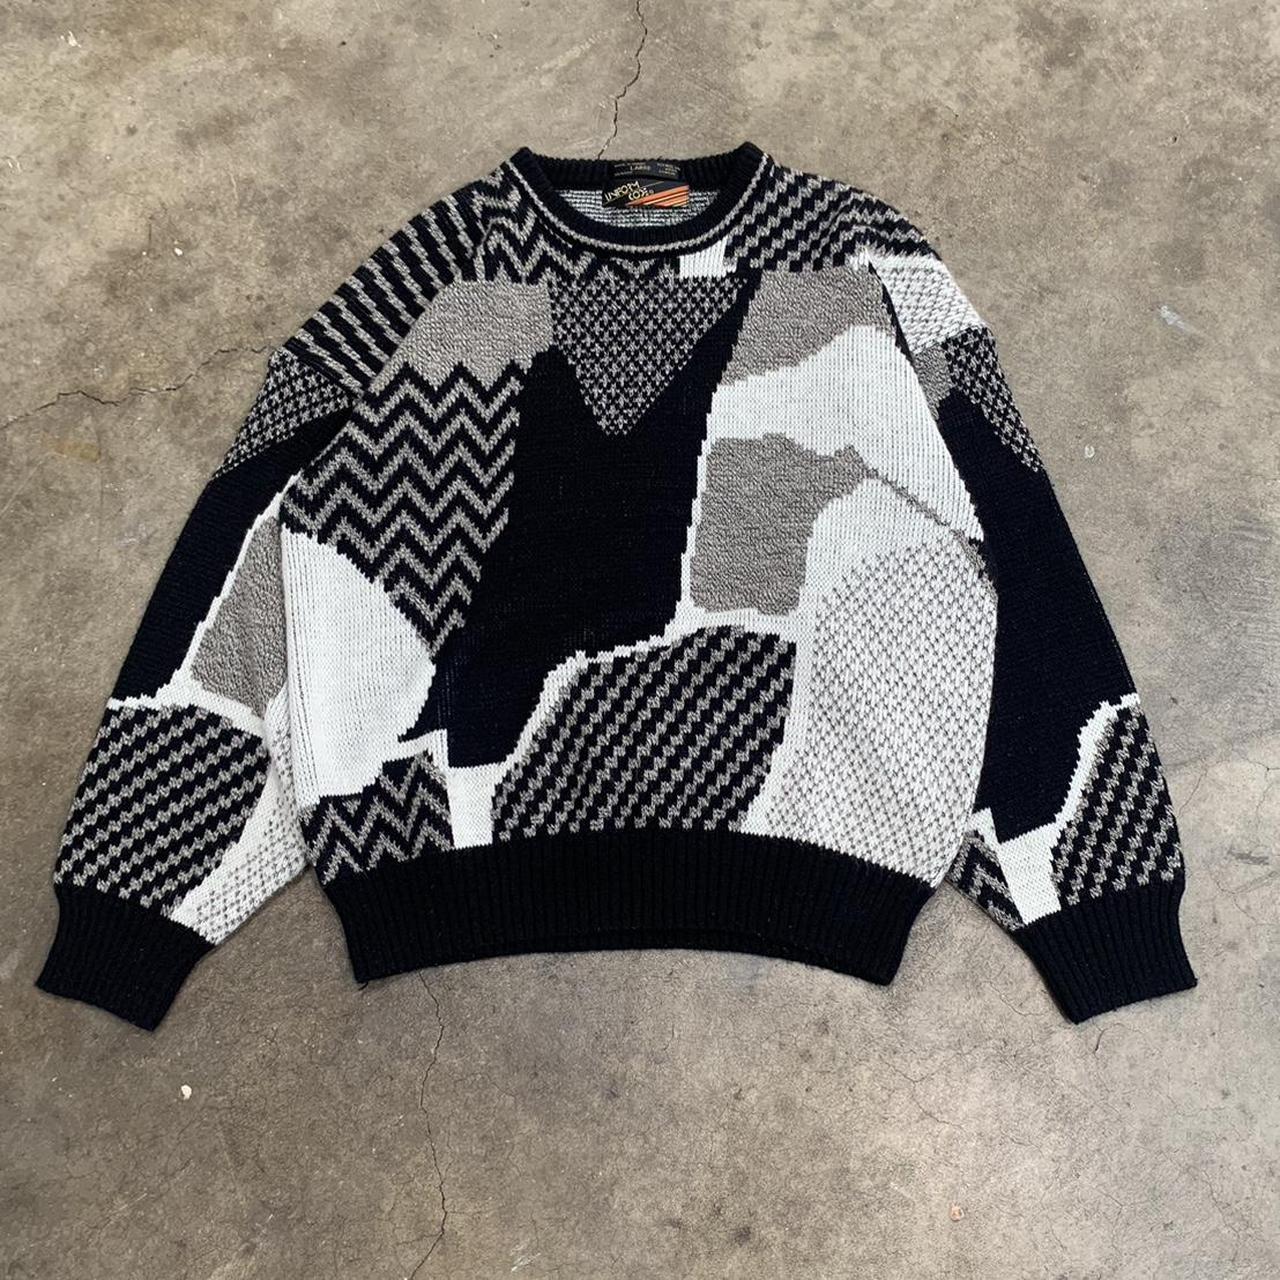 Vintage 90s Uniform Code knit sweater in good... - Depop